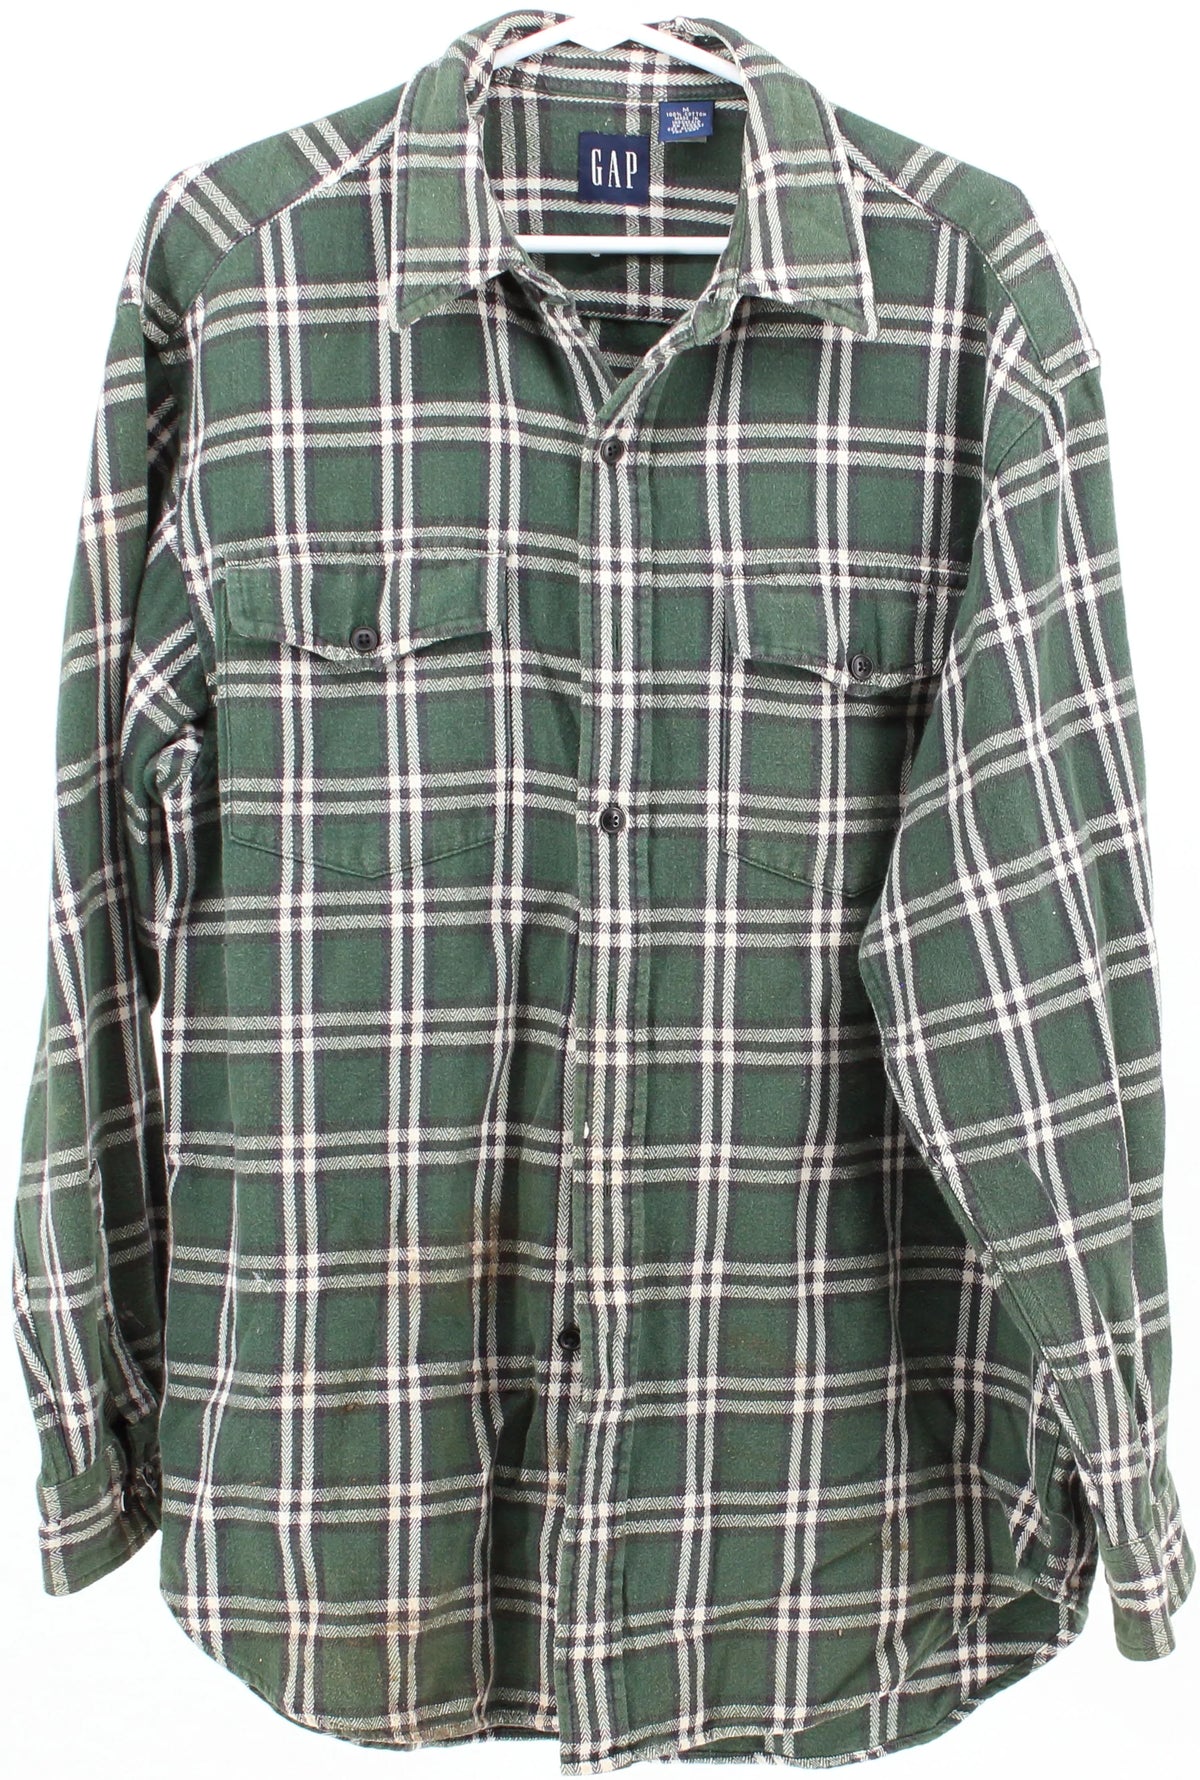 Gap Green Plaid Flannel Shirt